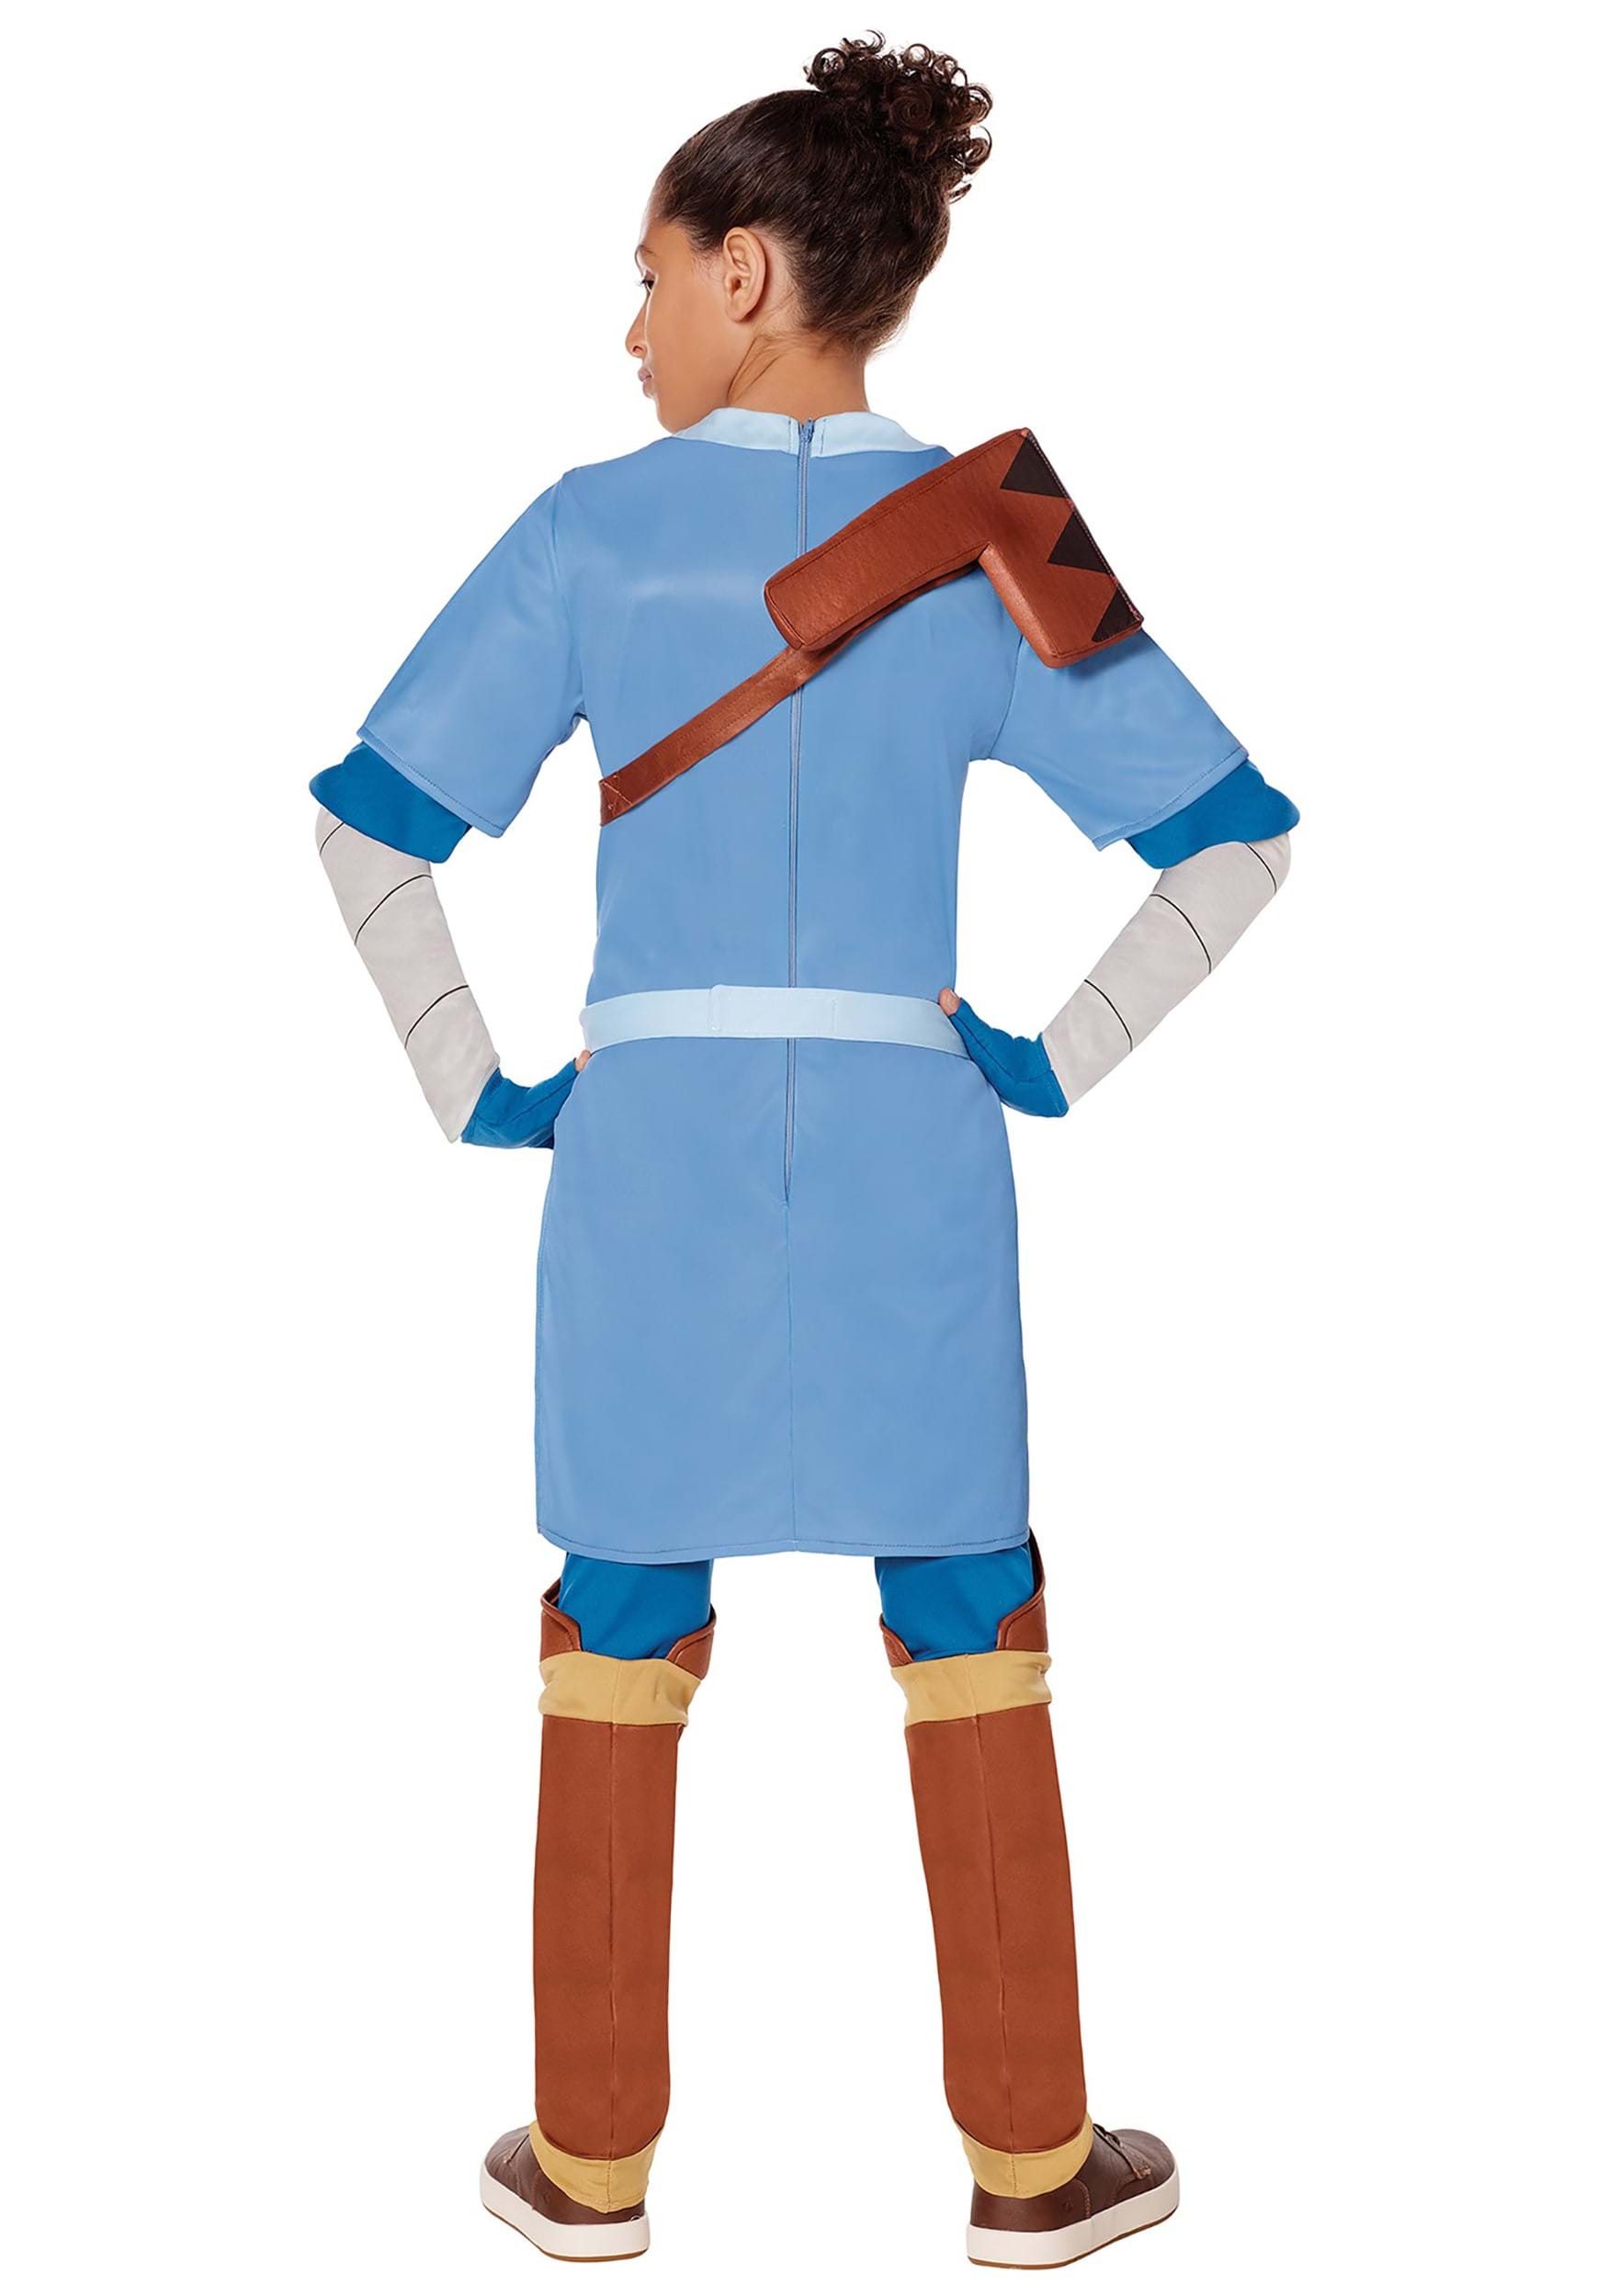 Avatar The Last Airbender Sokka Children's Costume